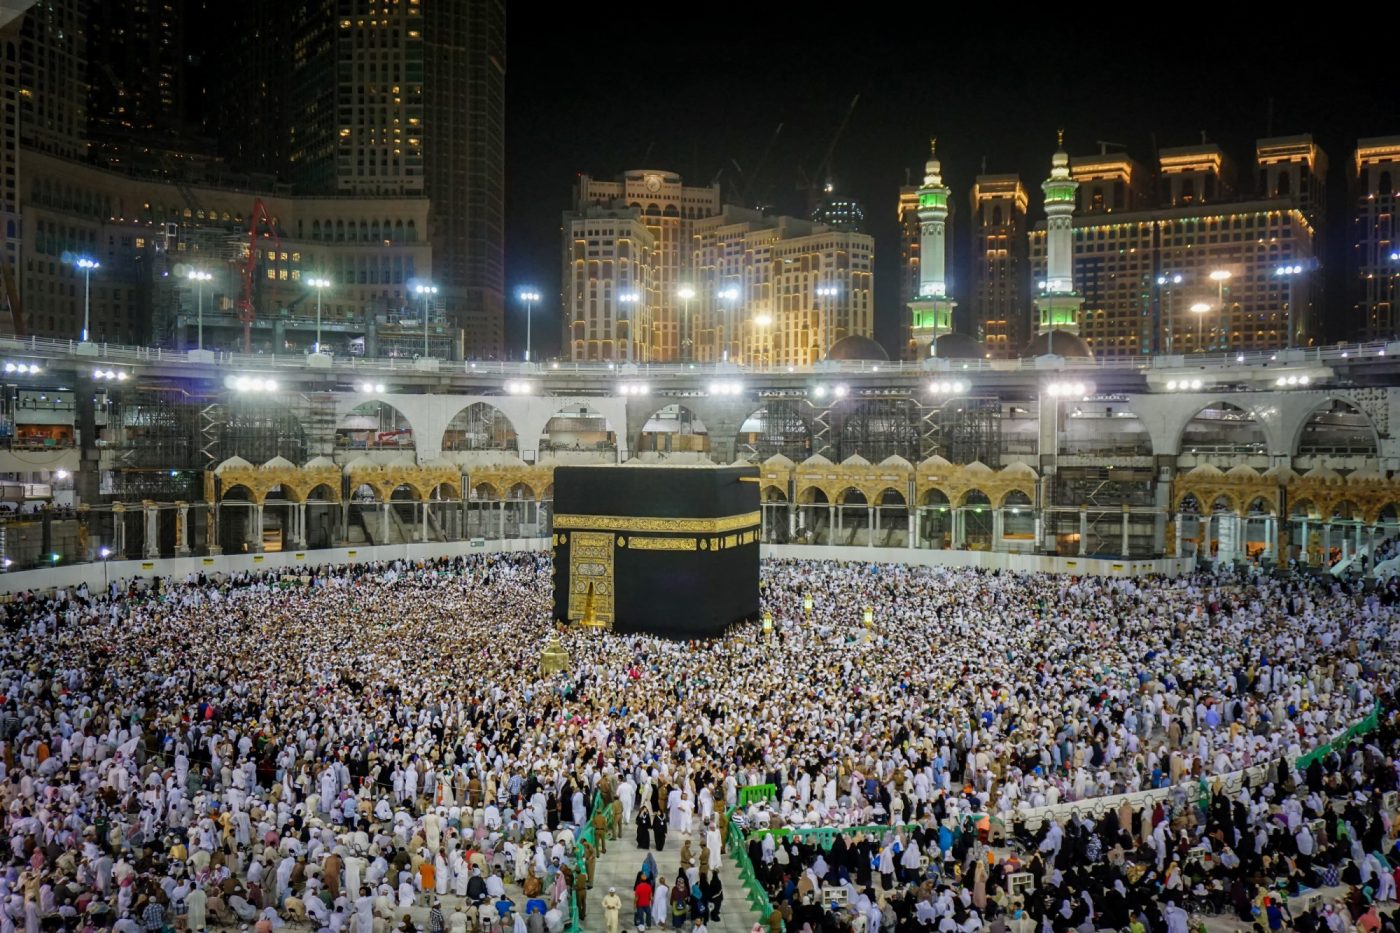 makkah holy places to visit